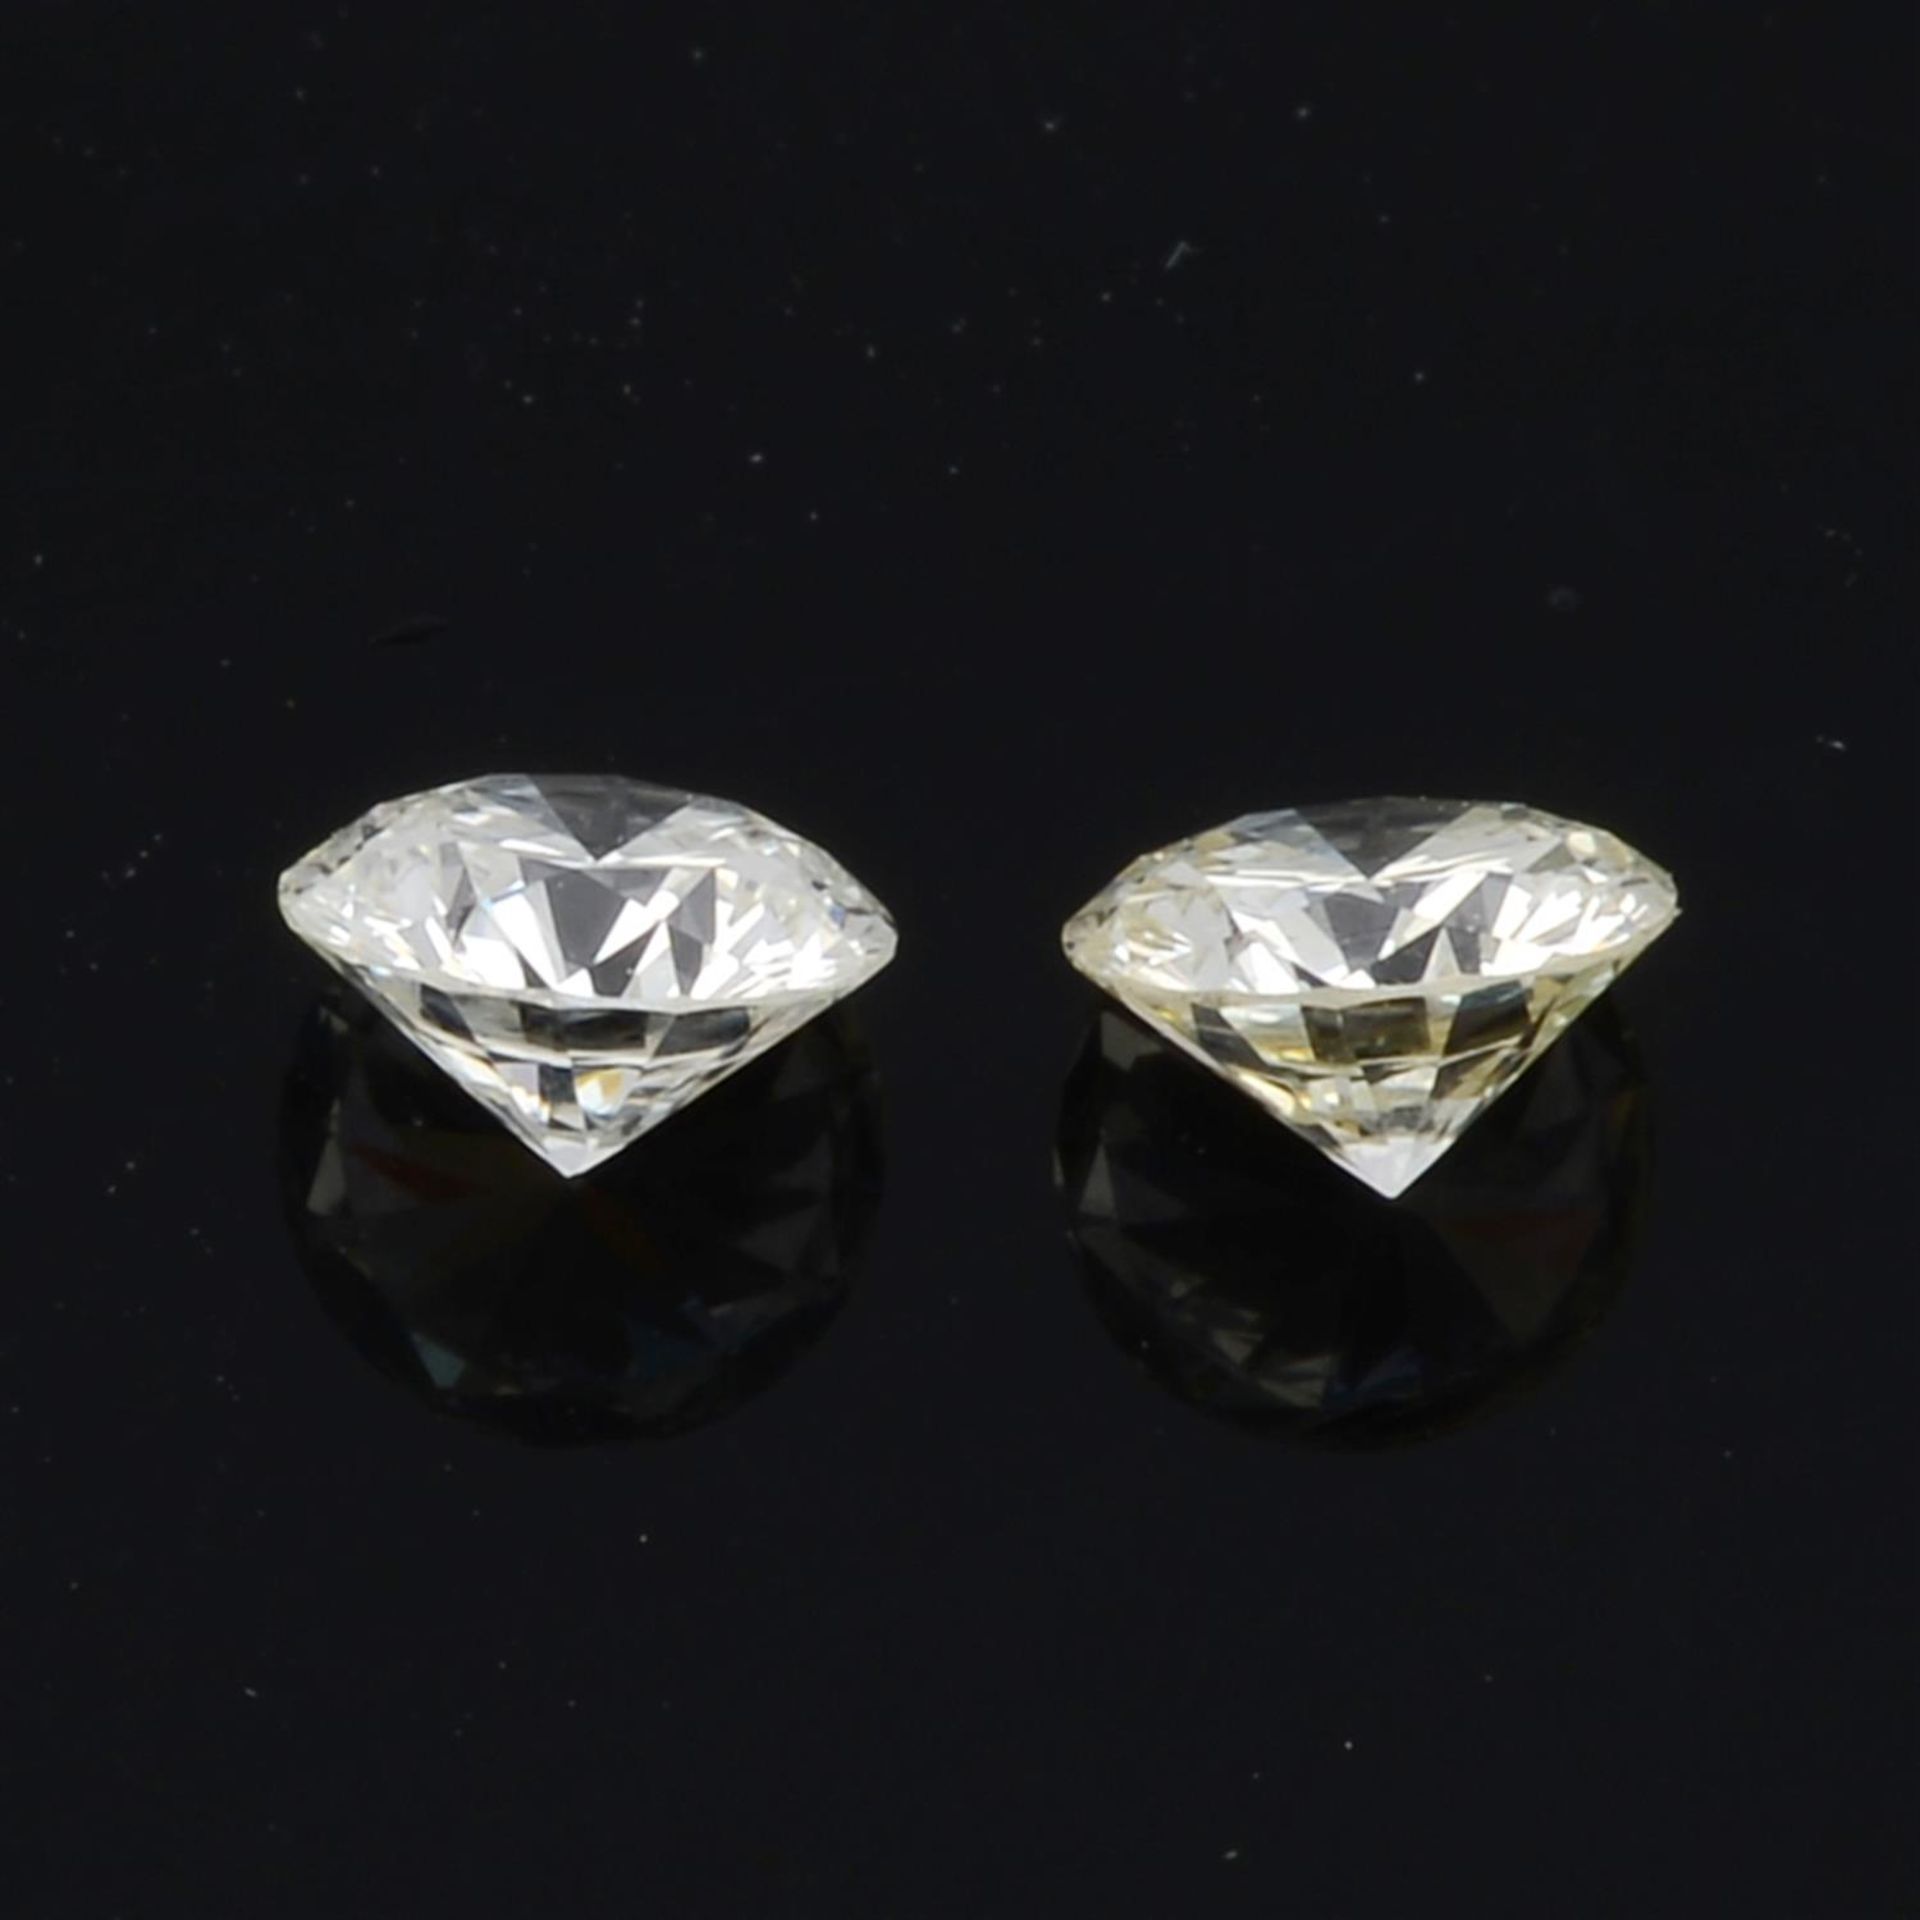 Two brilliant-cut diamonds, 0.50ct - Image 2 of 2